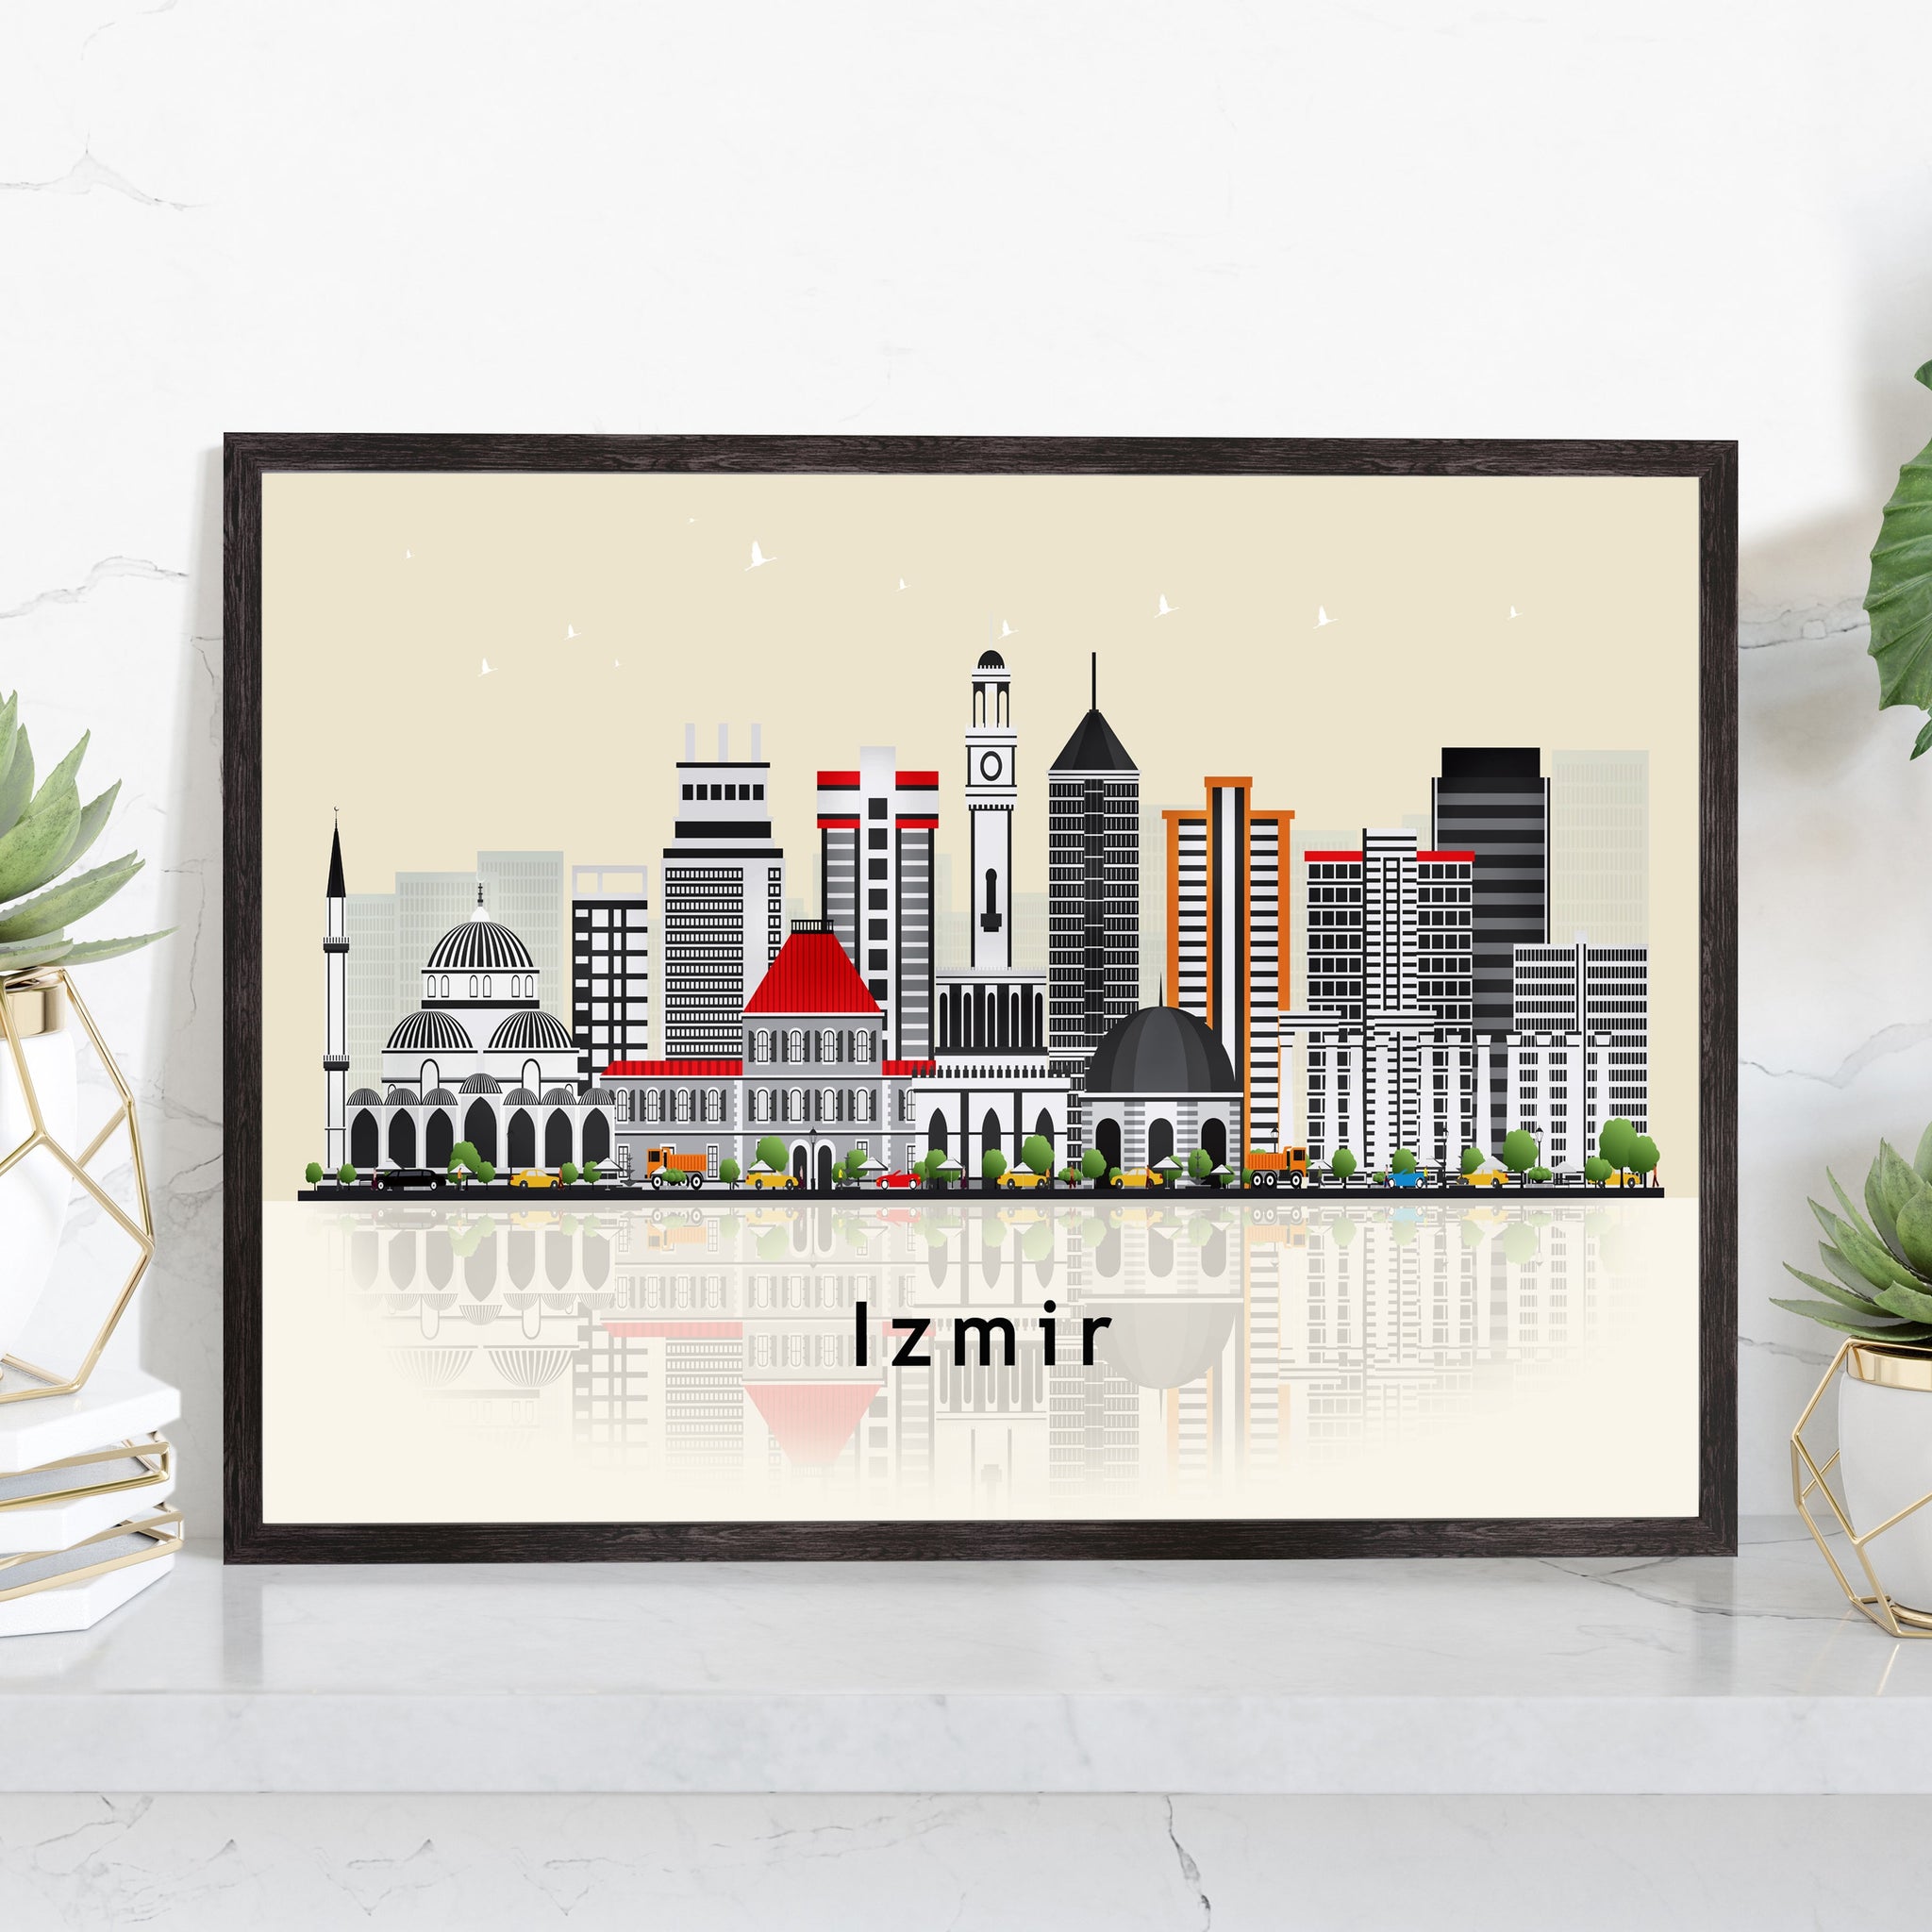 IZMIR TURKEY Illustration skyline poster, Modern skyline cityscape poster print, Izmir landmark map poster, Home wall decoration